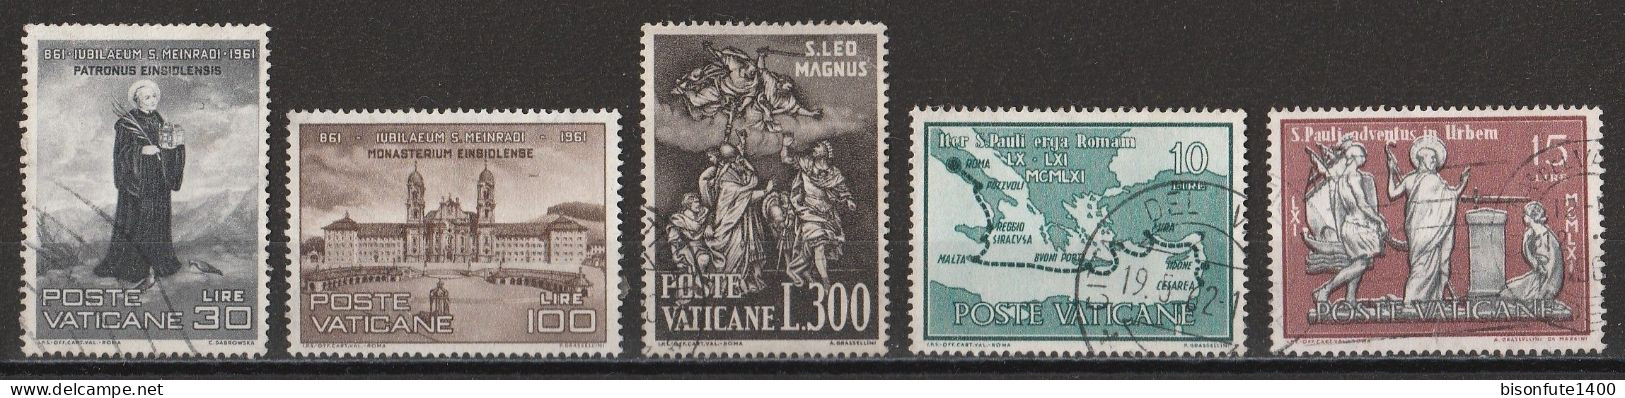 Vatican 1961 : Timbres Yvert & Tellier N° 316 - 317 - 321 - 322 - 323 - 329 - 331 - 332 - 336 Et 343 Oblitérés. - Gebraucht